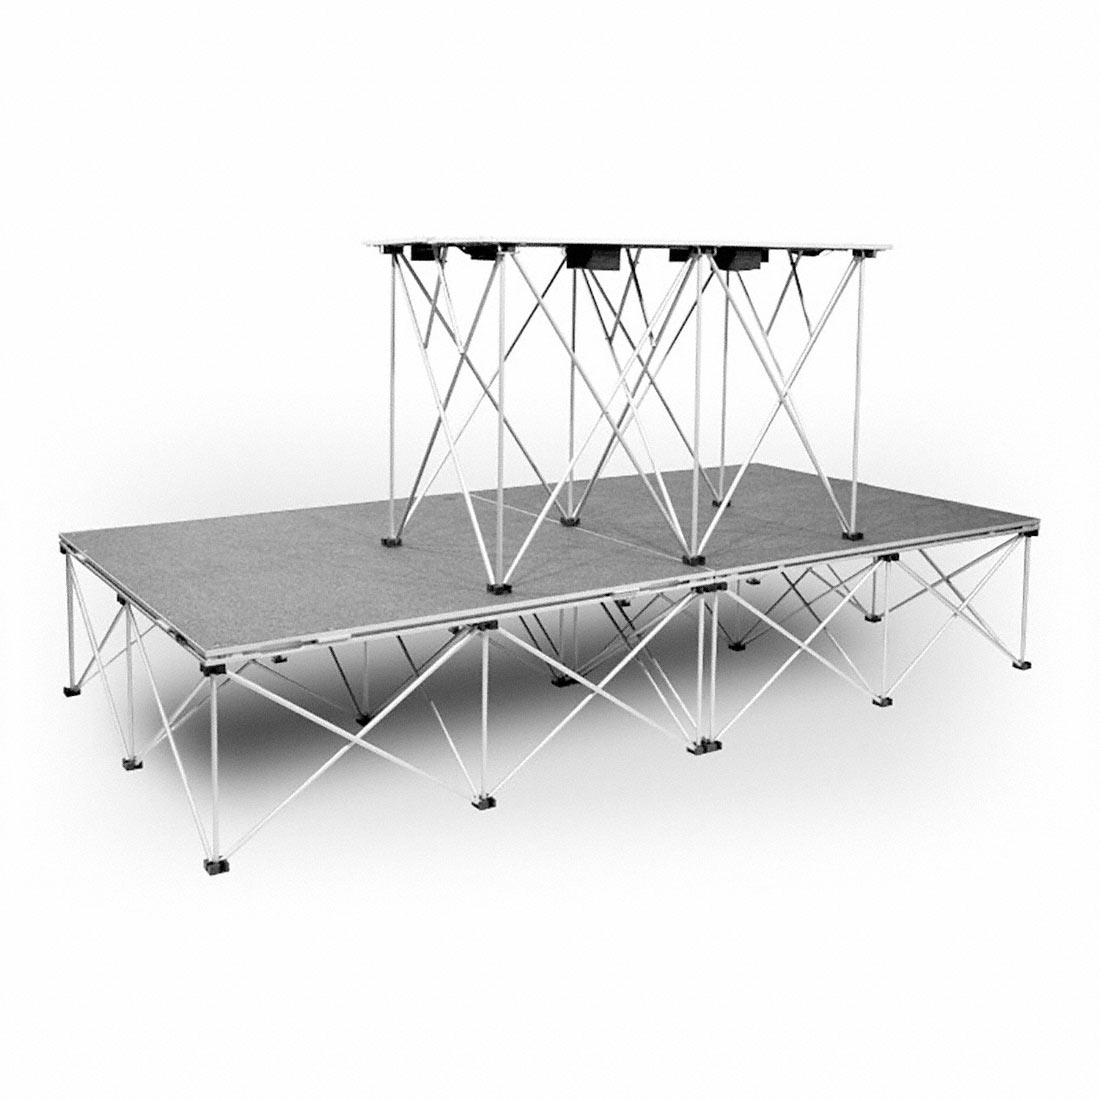 Intellistage 4 X8 Dj Platform Package W 30 H Folding Table